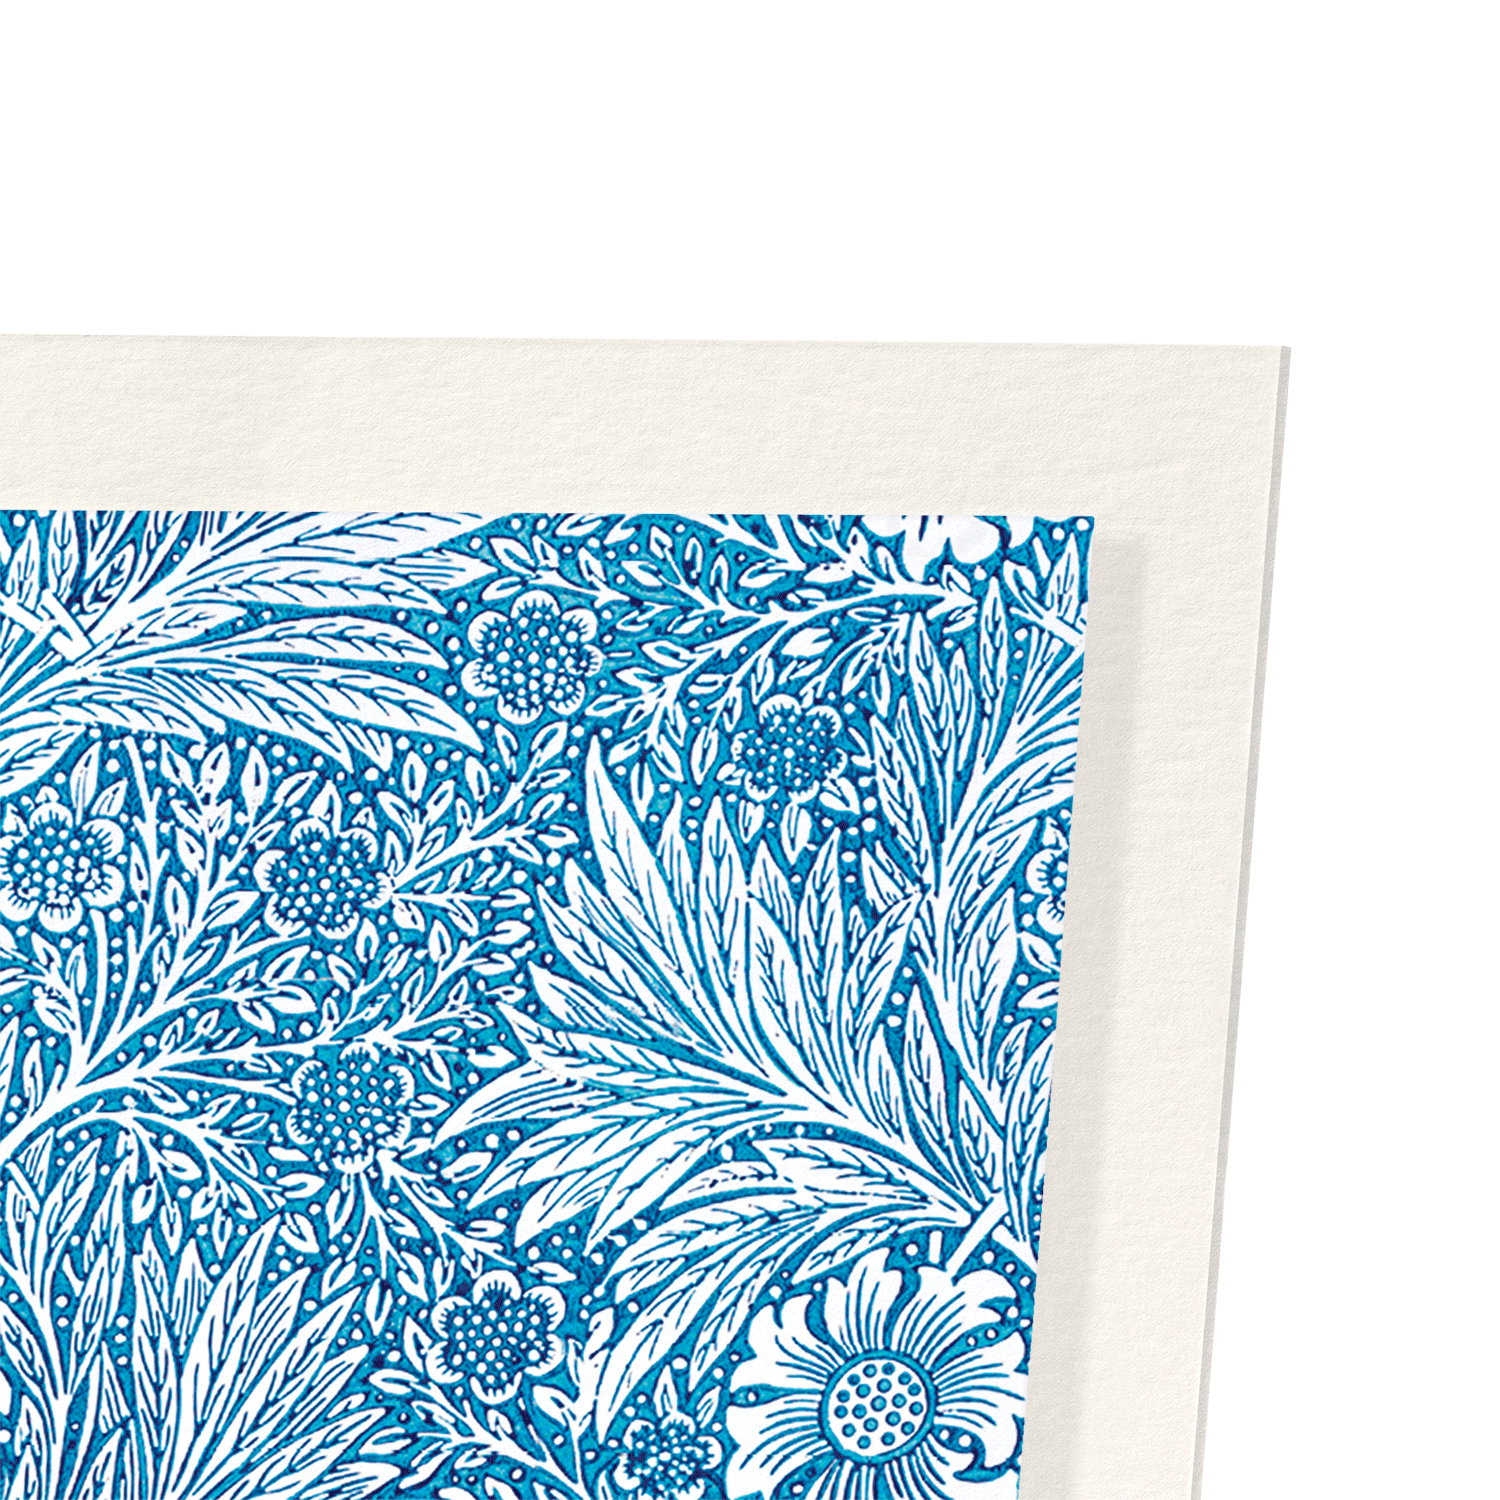 BLUE MARIGOLD: Pattern Art Print